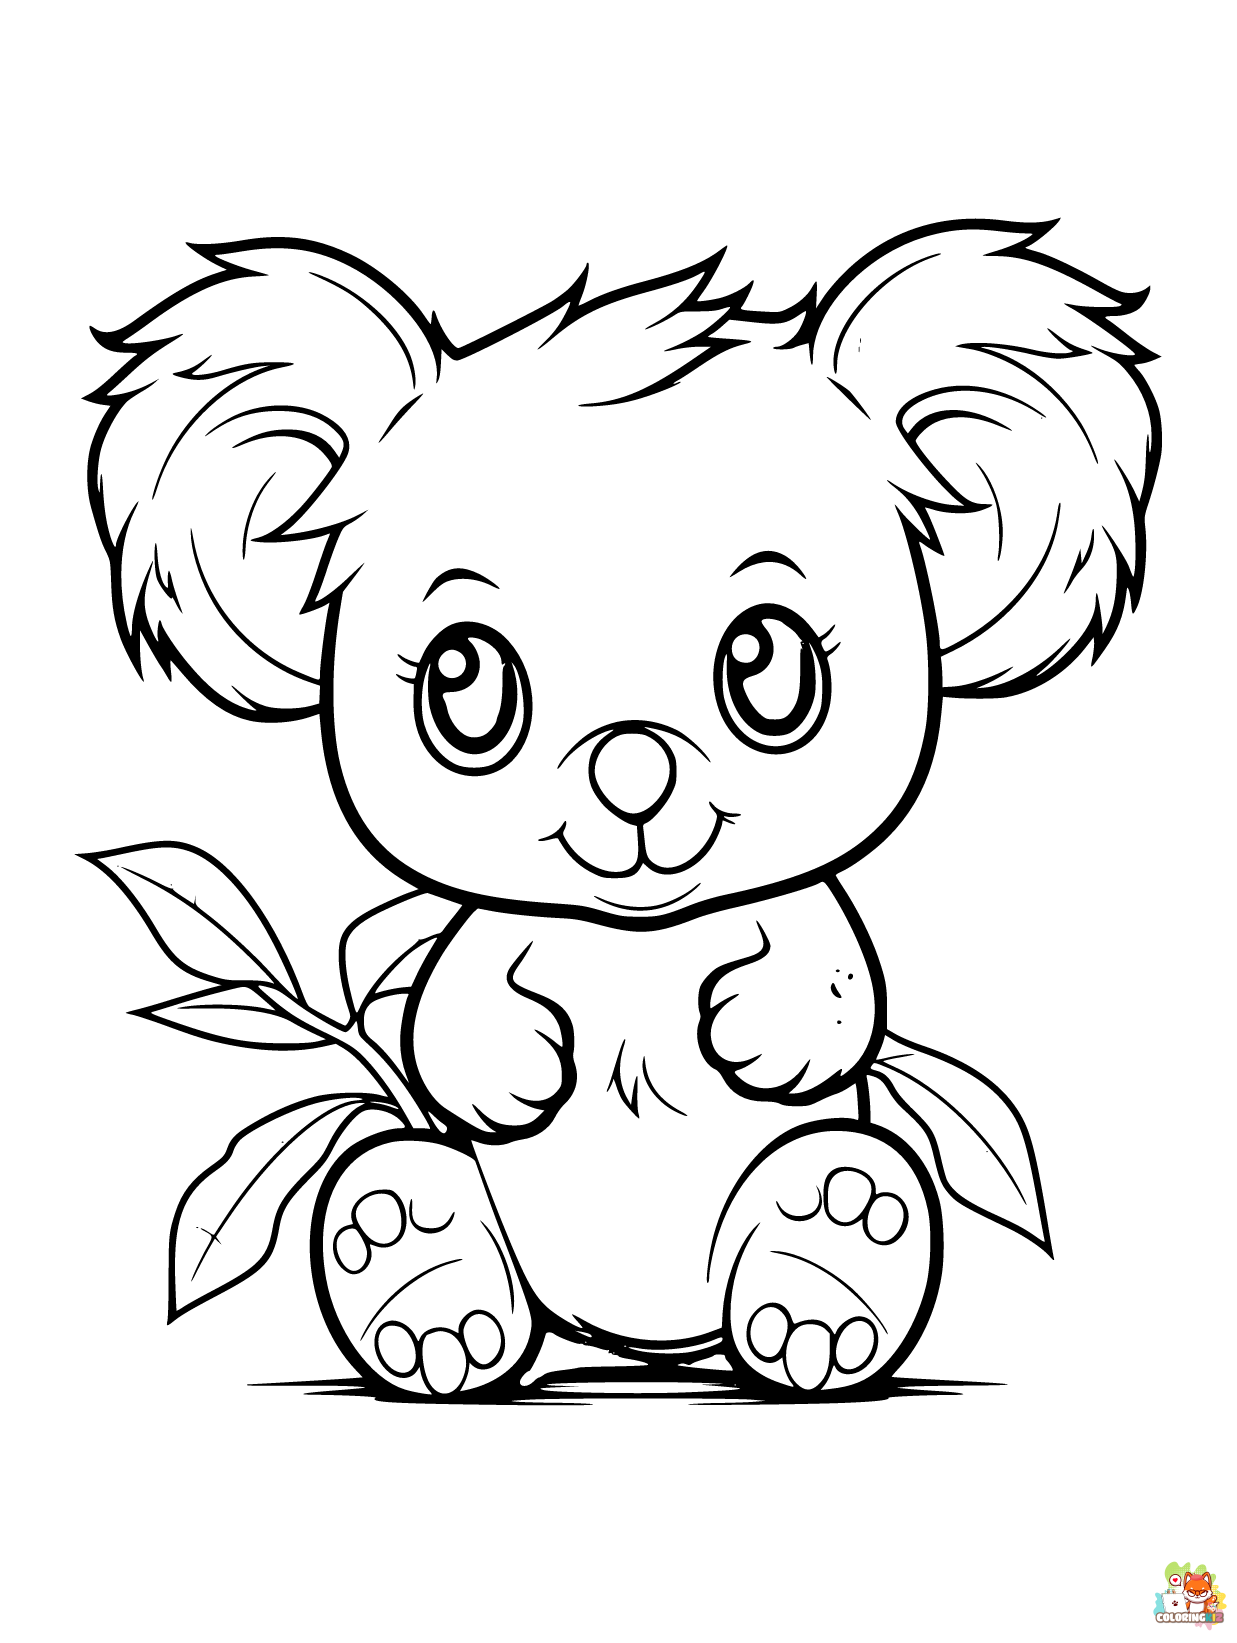 Koala coloring pages printable free